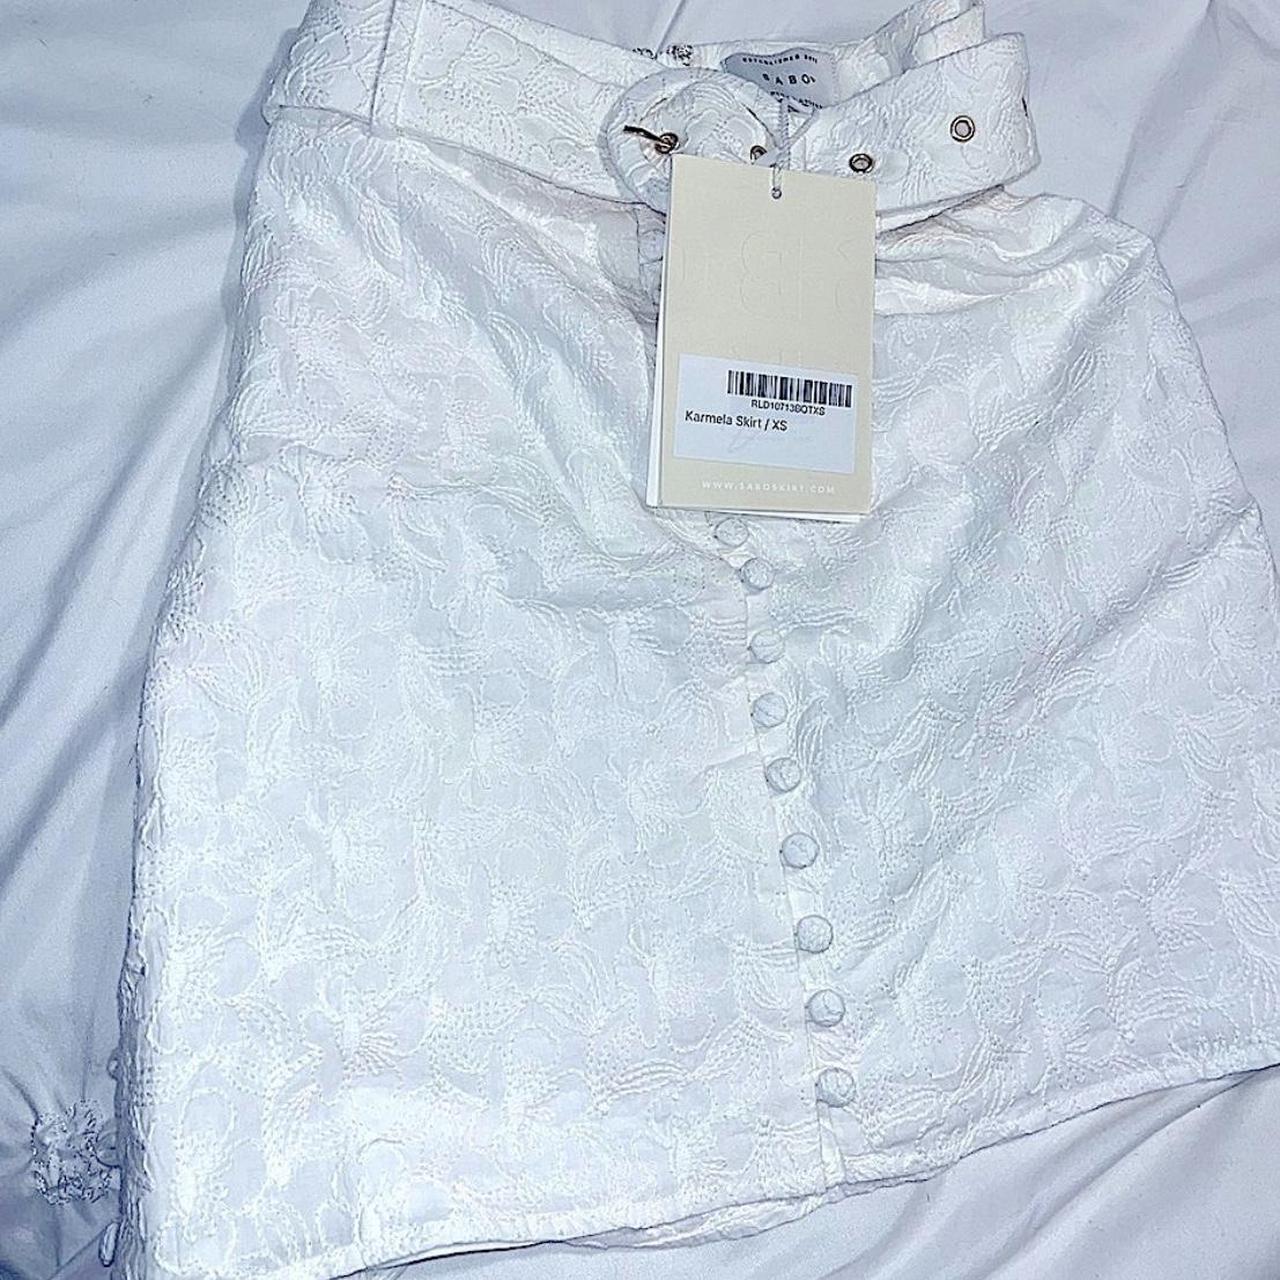 Product Image 3 - Size xsmall
Still nwt
Karmella skirt
Originally 58$

The